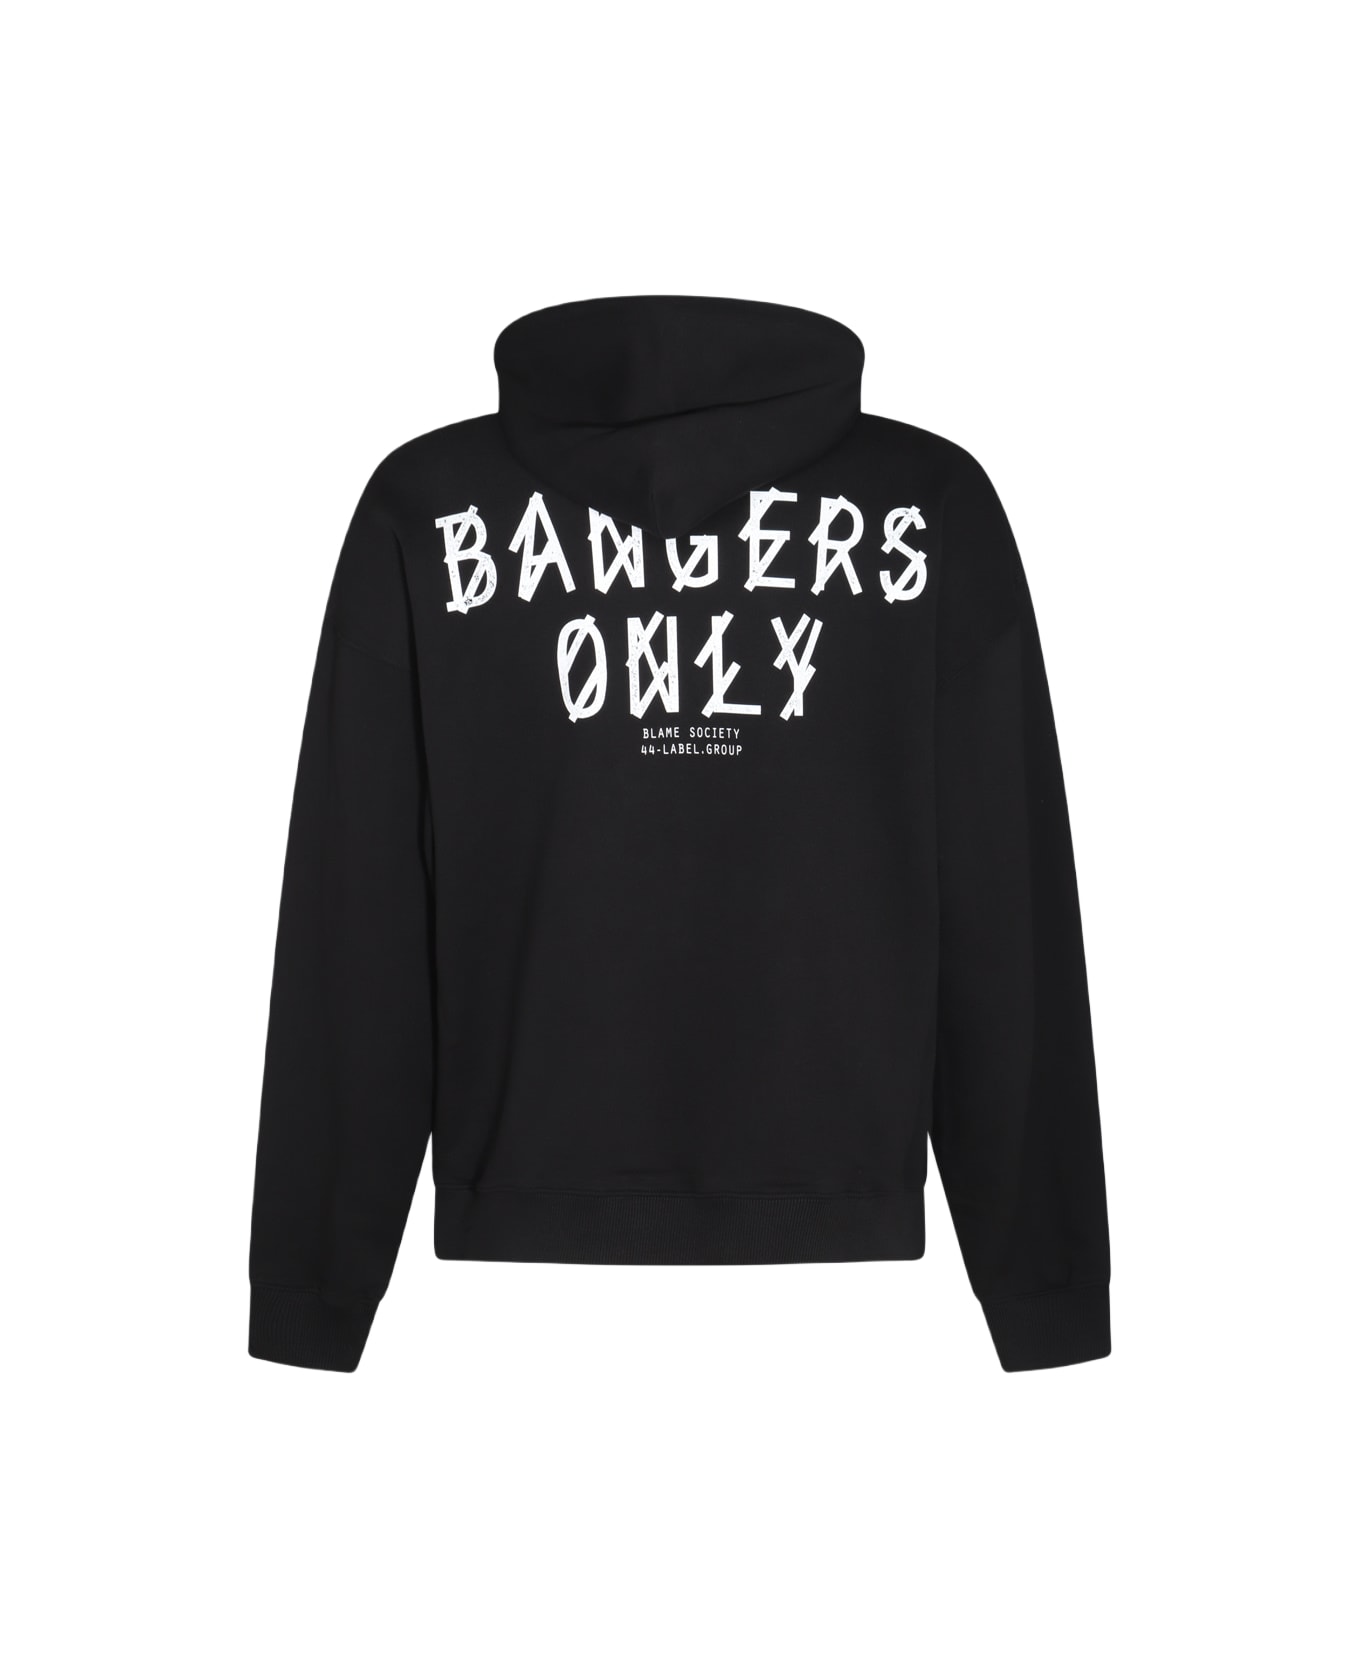 44 Label Group Black Cotton Bangers Sweatshirt - Black フリース